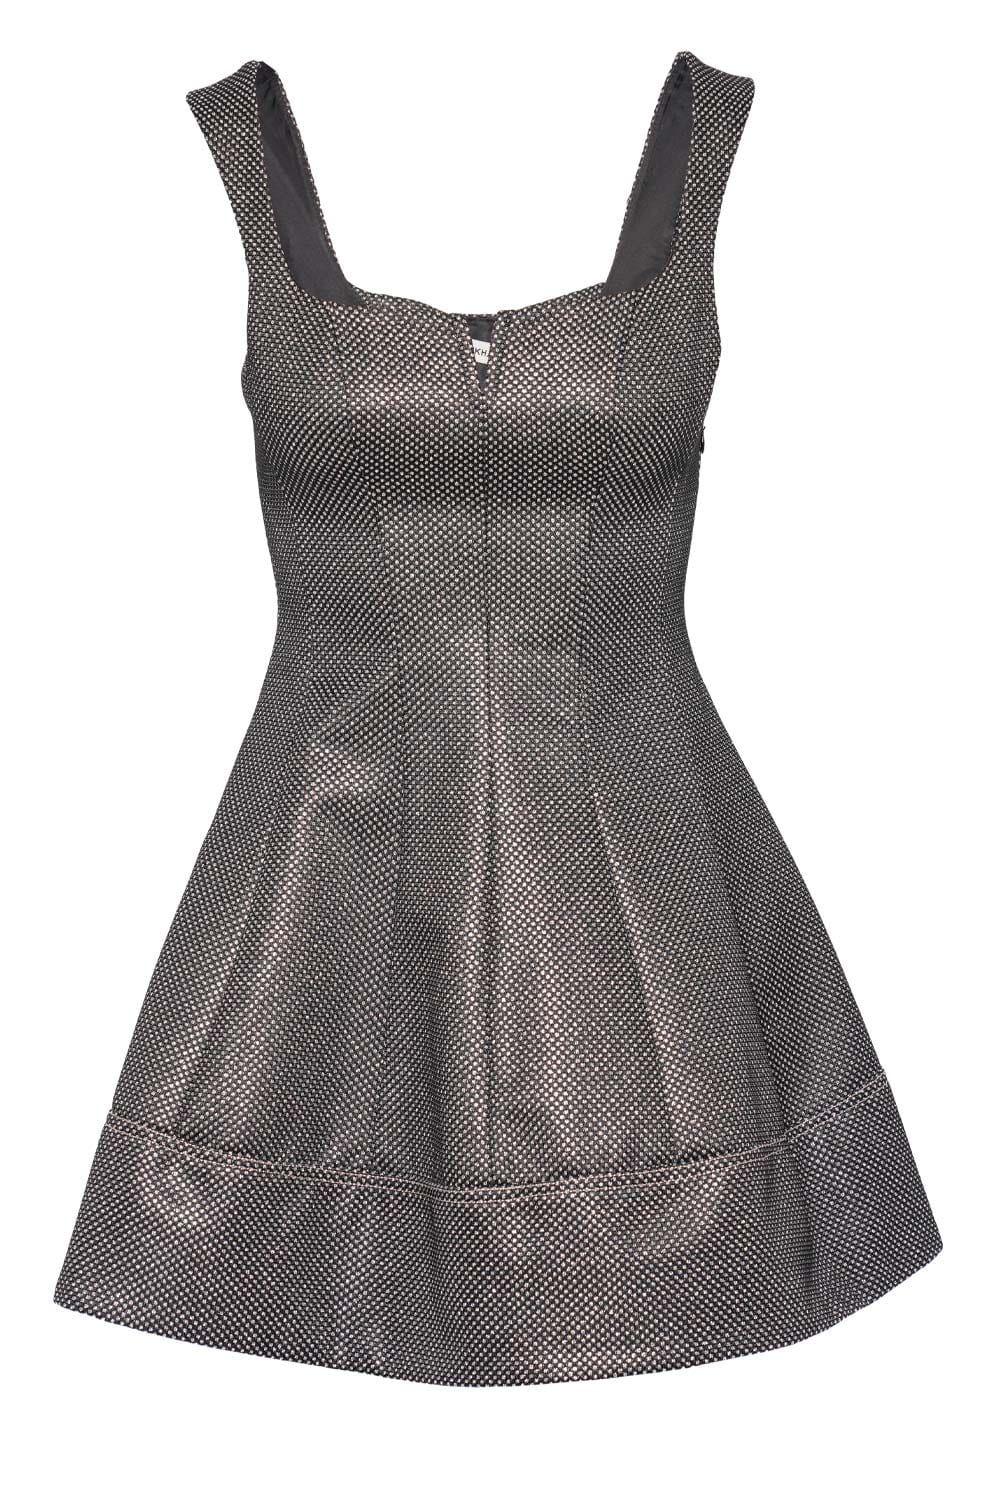 SIMKHAI Lydie Black Embellished Mini Dress